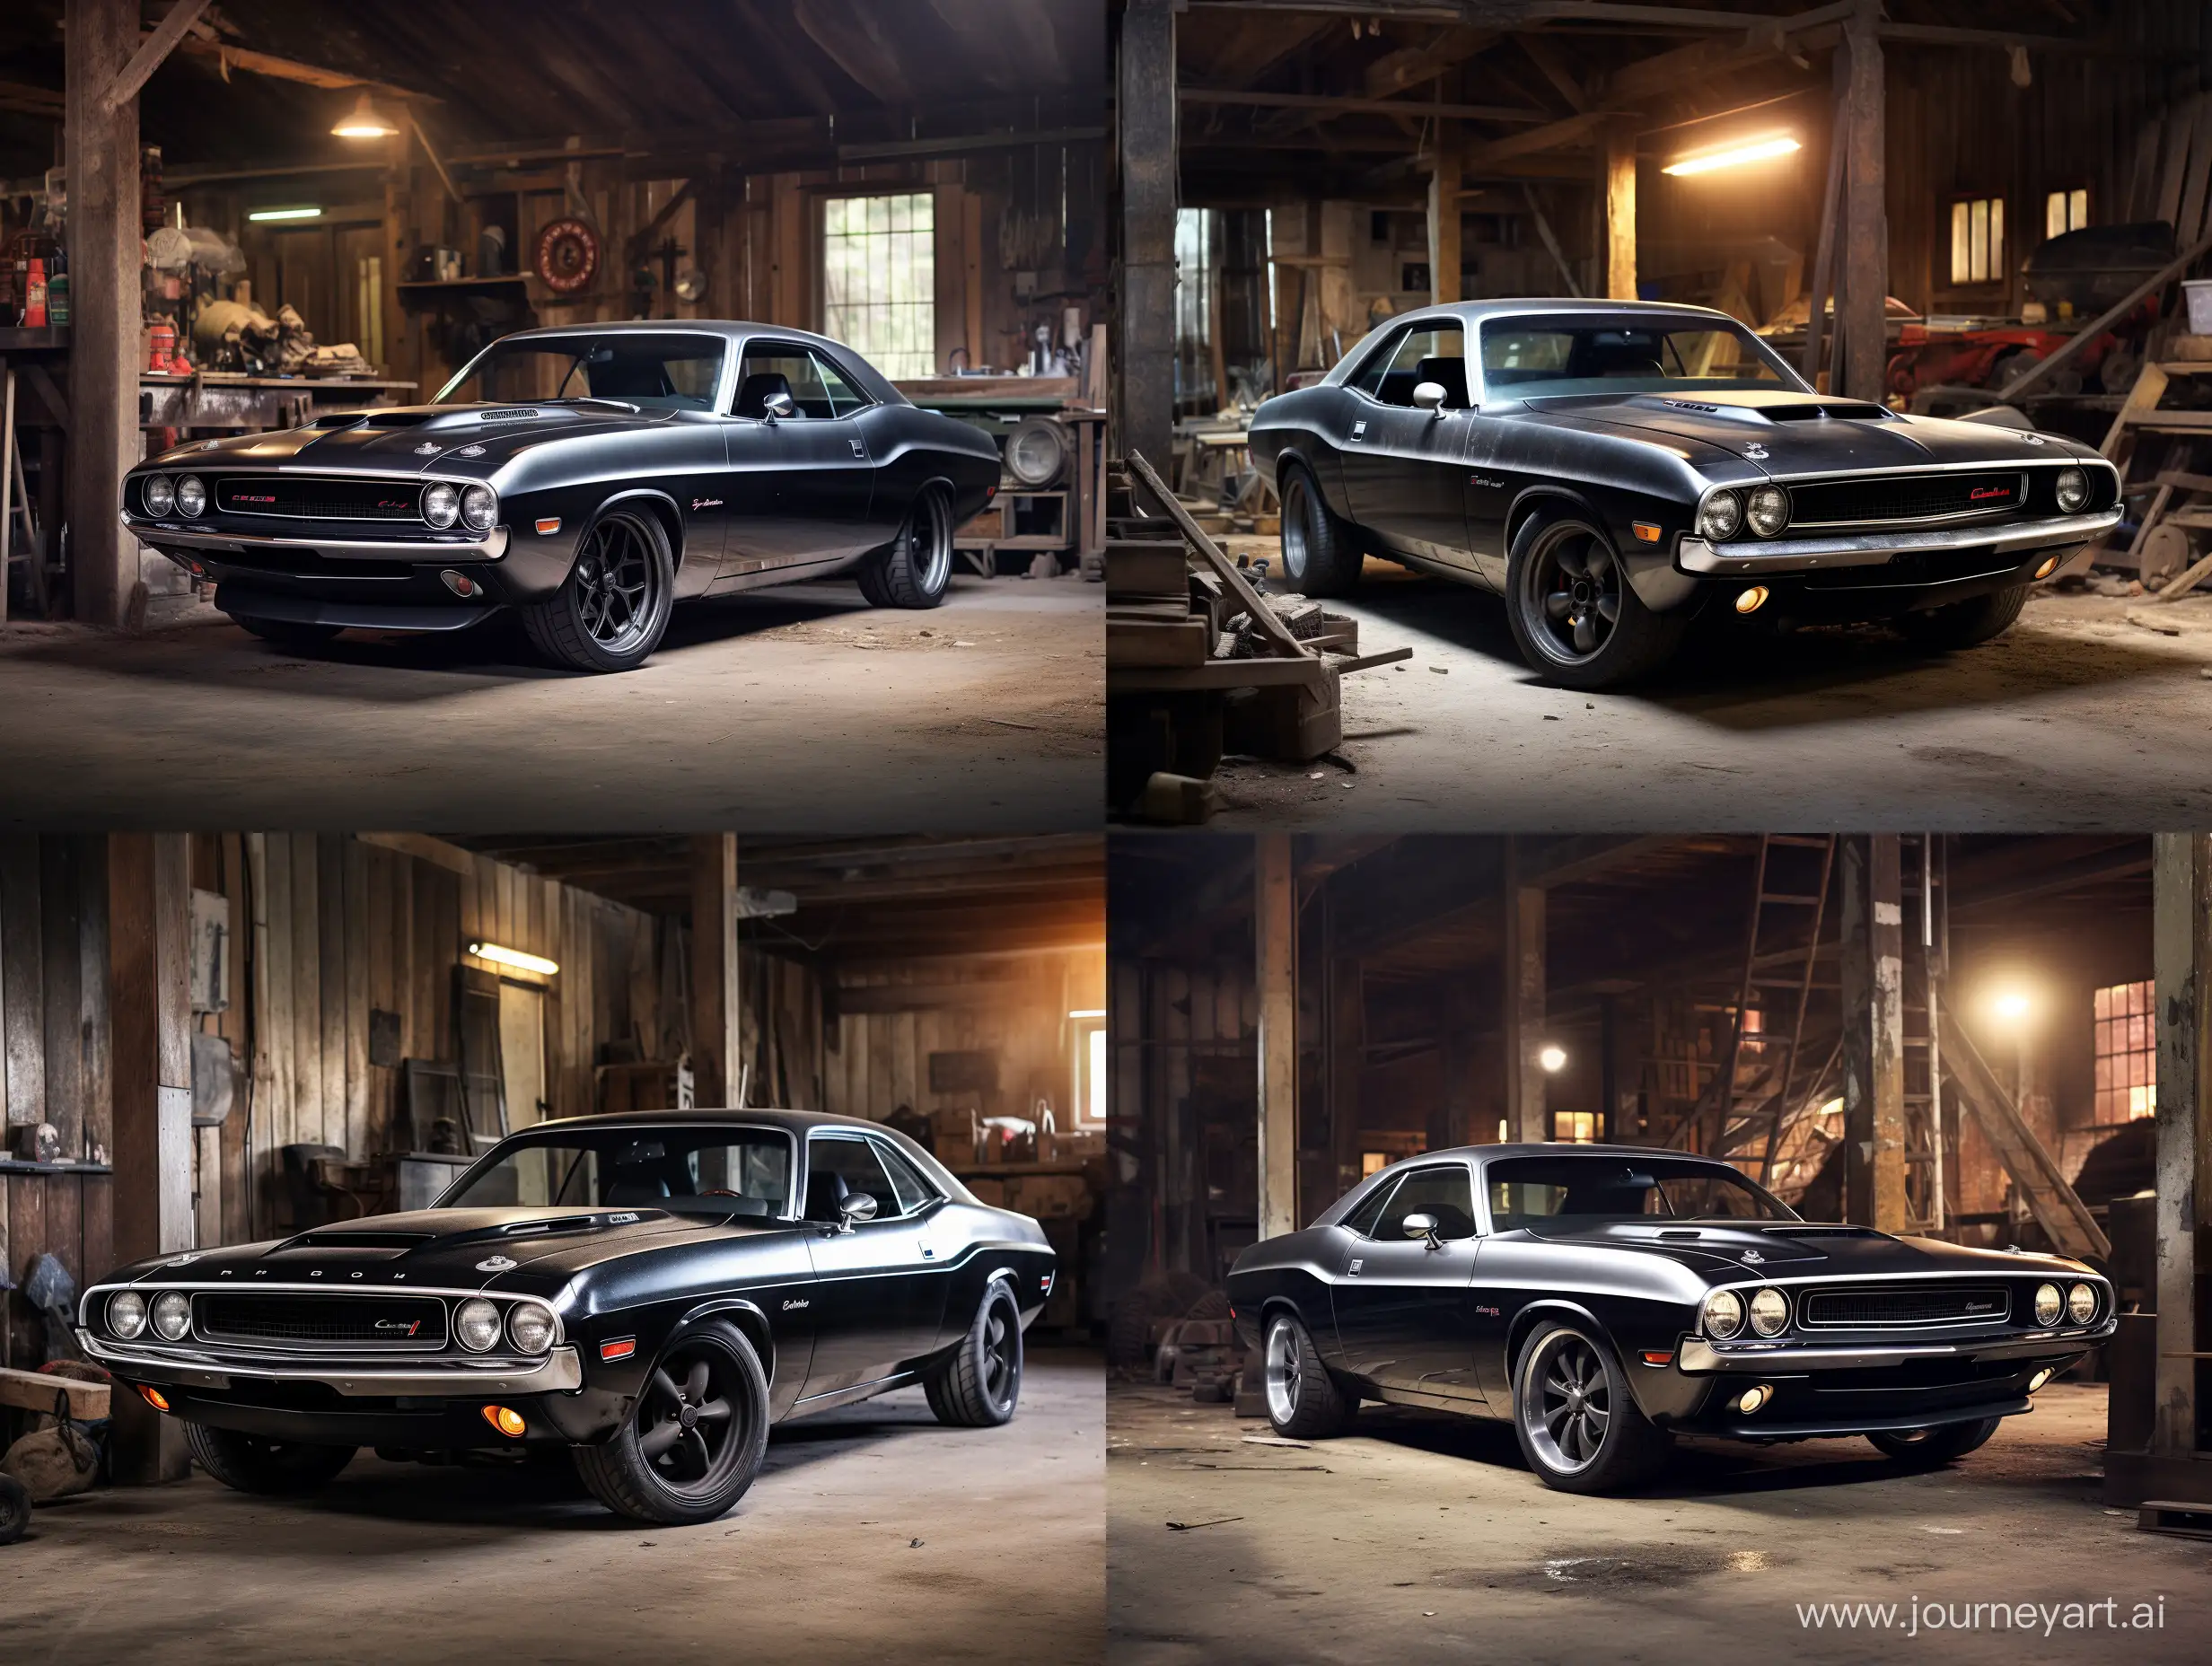 Old Dodge Challenger car in garage dark beautiful photo for album cover